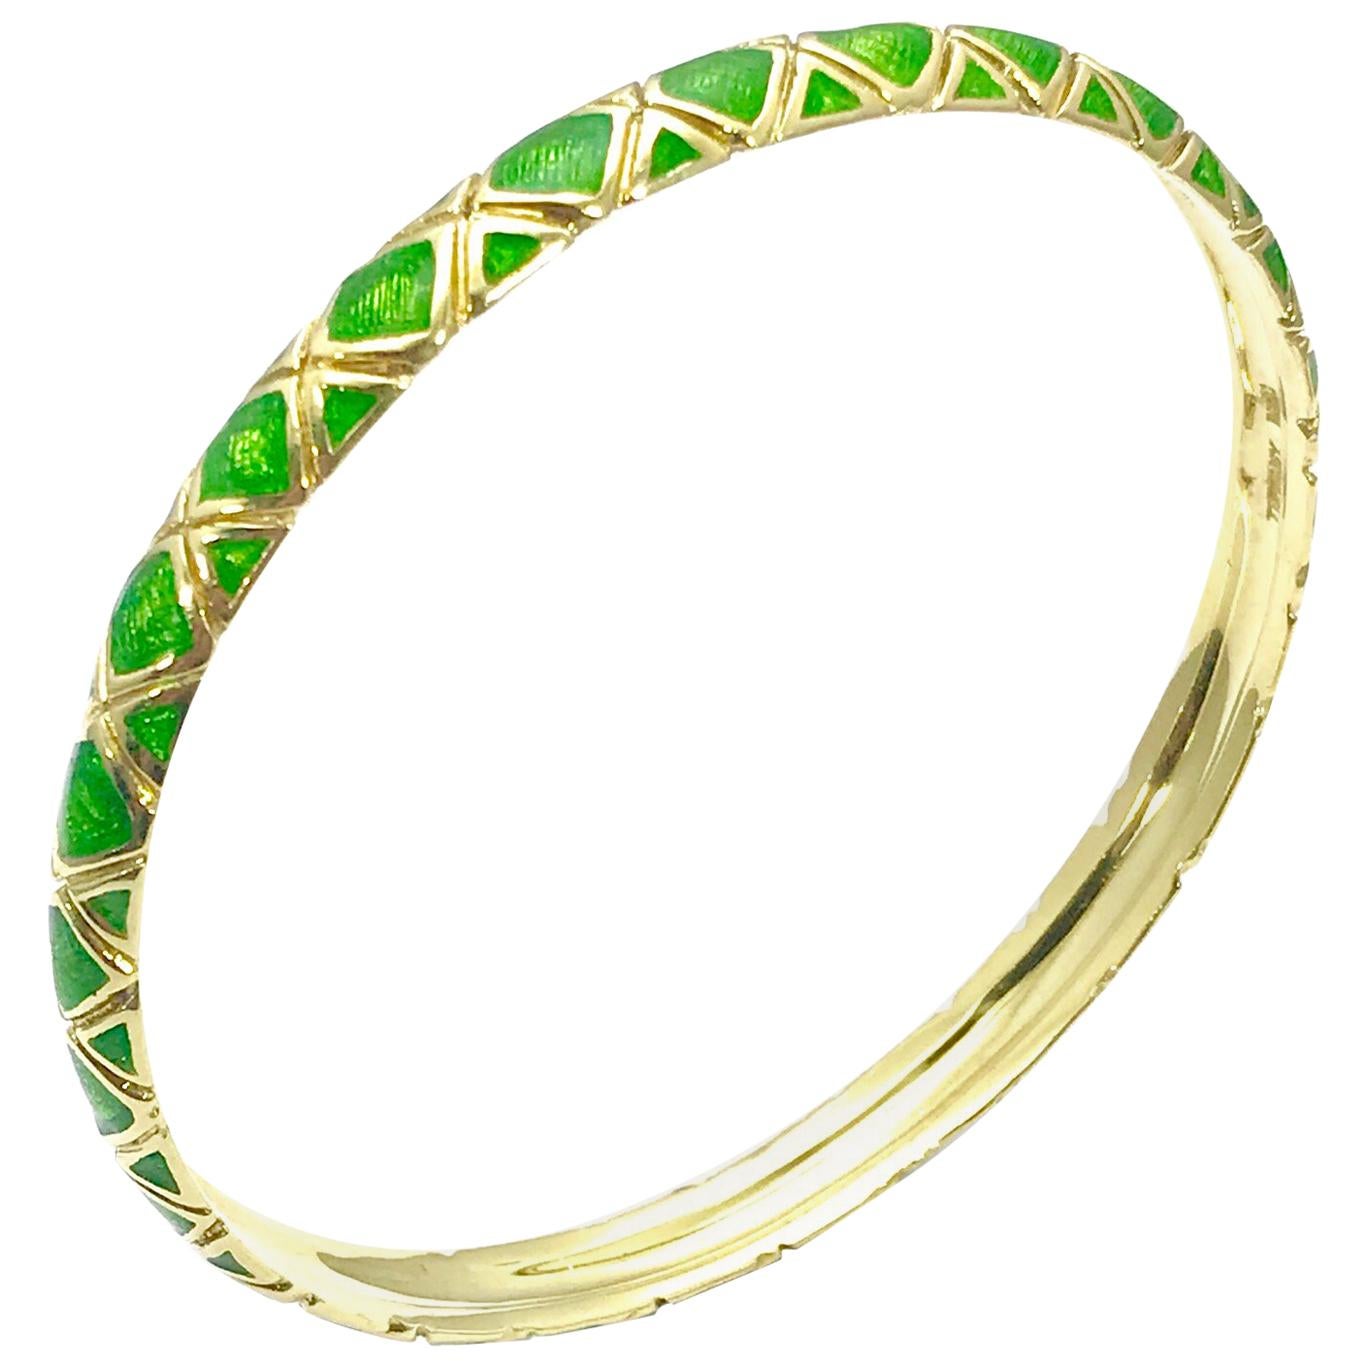 Tiffany & Co. 18 Karat Gold and Green Enamel Bangle Bracelet